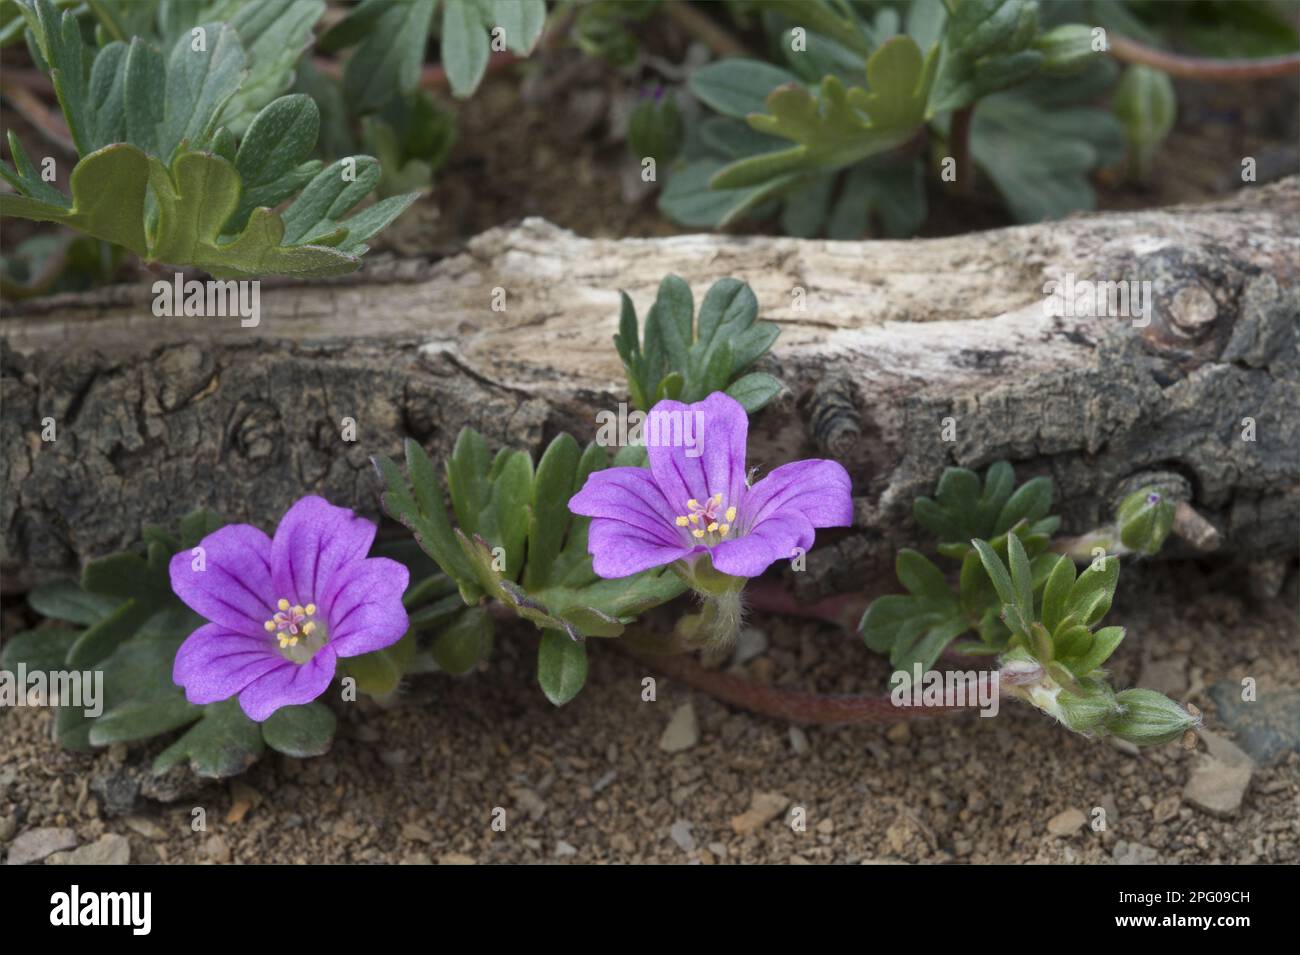 Geranio Magellano fiorito (Geranium magellanicum) cresce su terreni desolati lasciati dall'industria mineraria del carbone, Rio Turbio, provincia di Santa Cruz Foto Stock